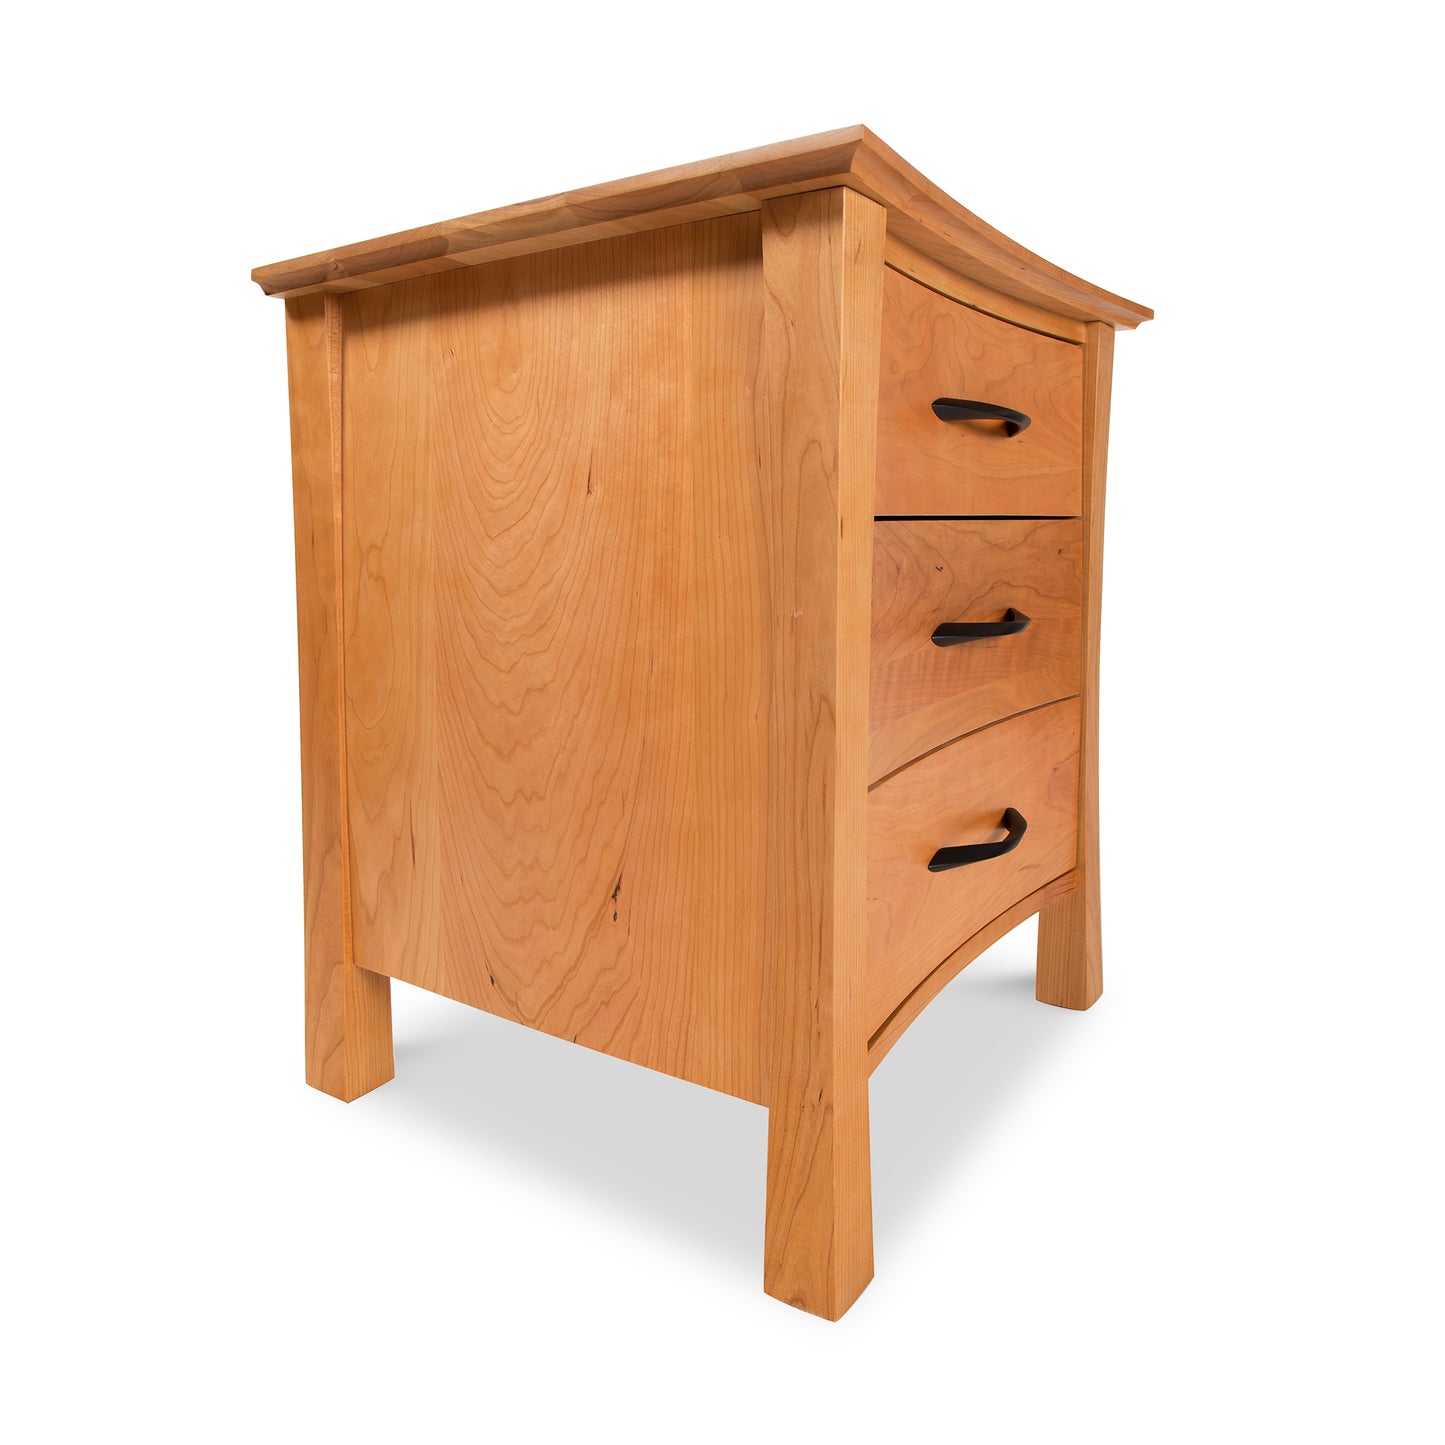 A Lyndon Furniture Green Mountain 3-Drawer Nightstand.